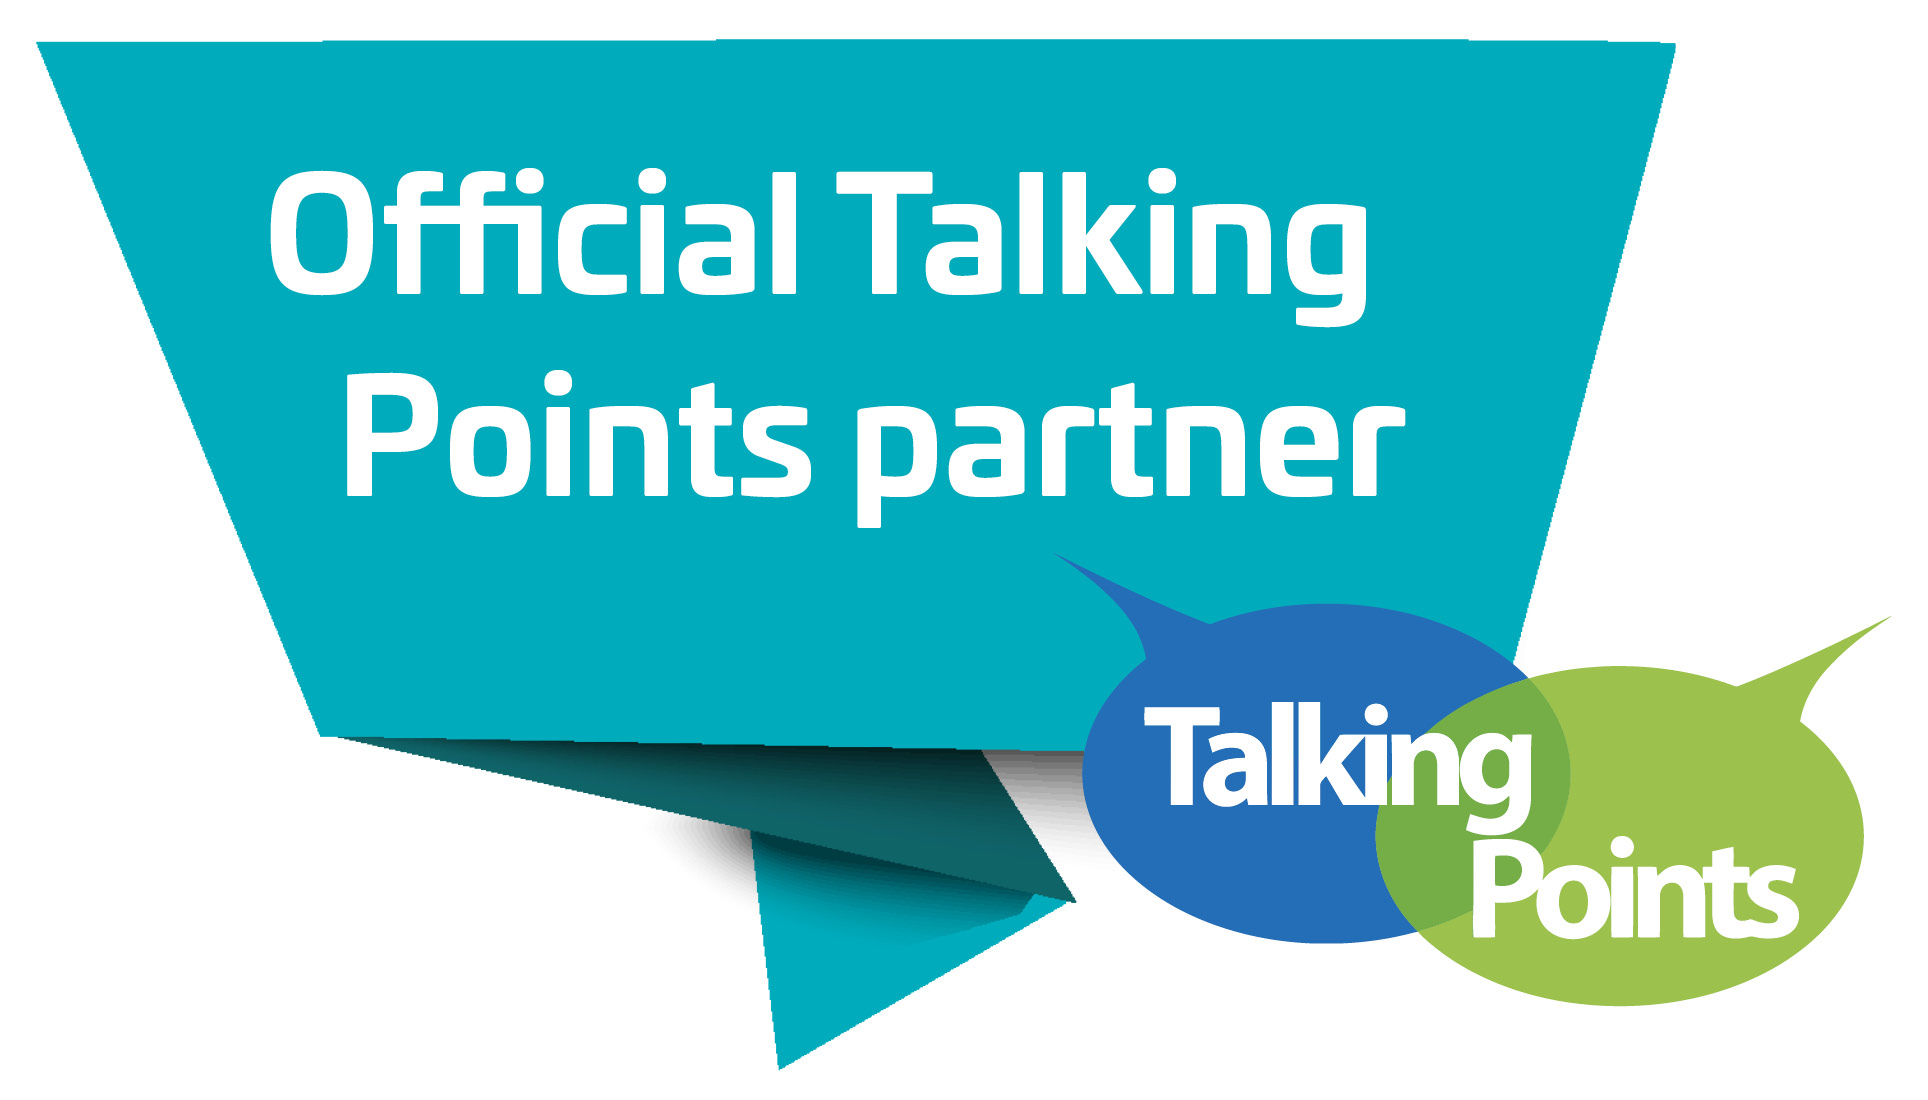 Official Talking Points partner